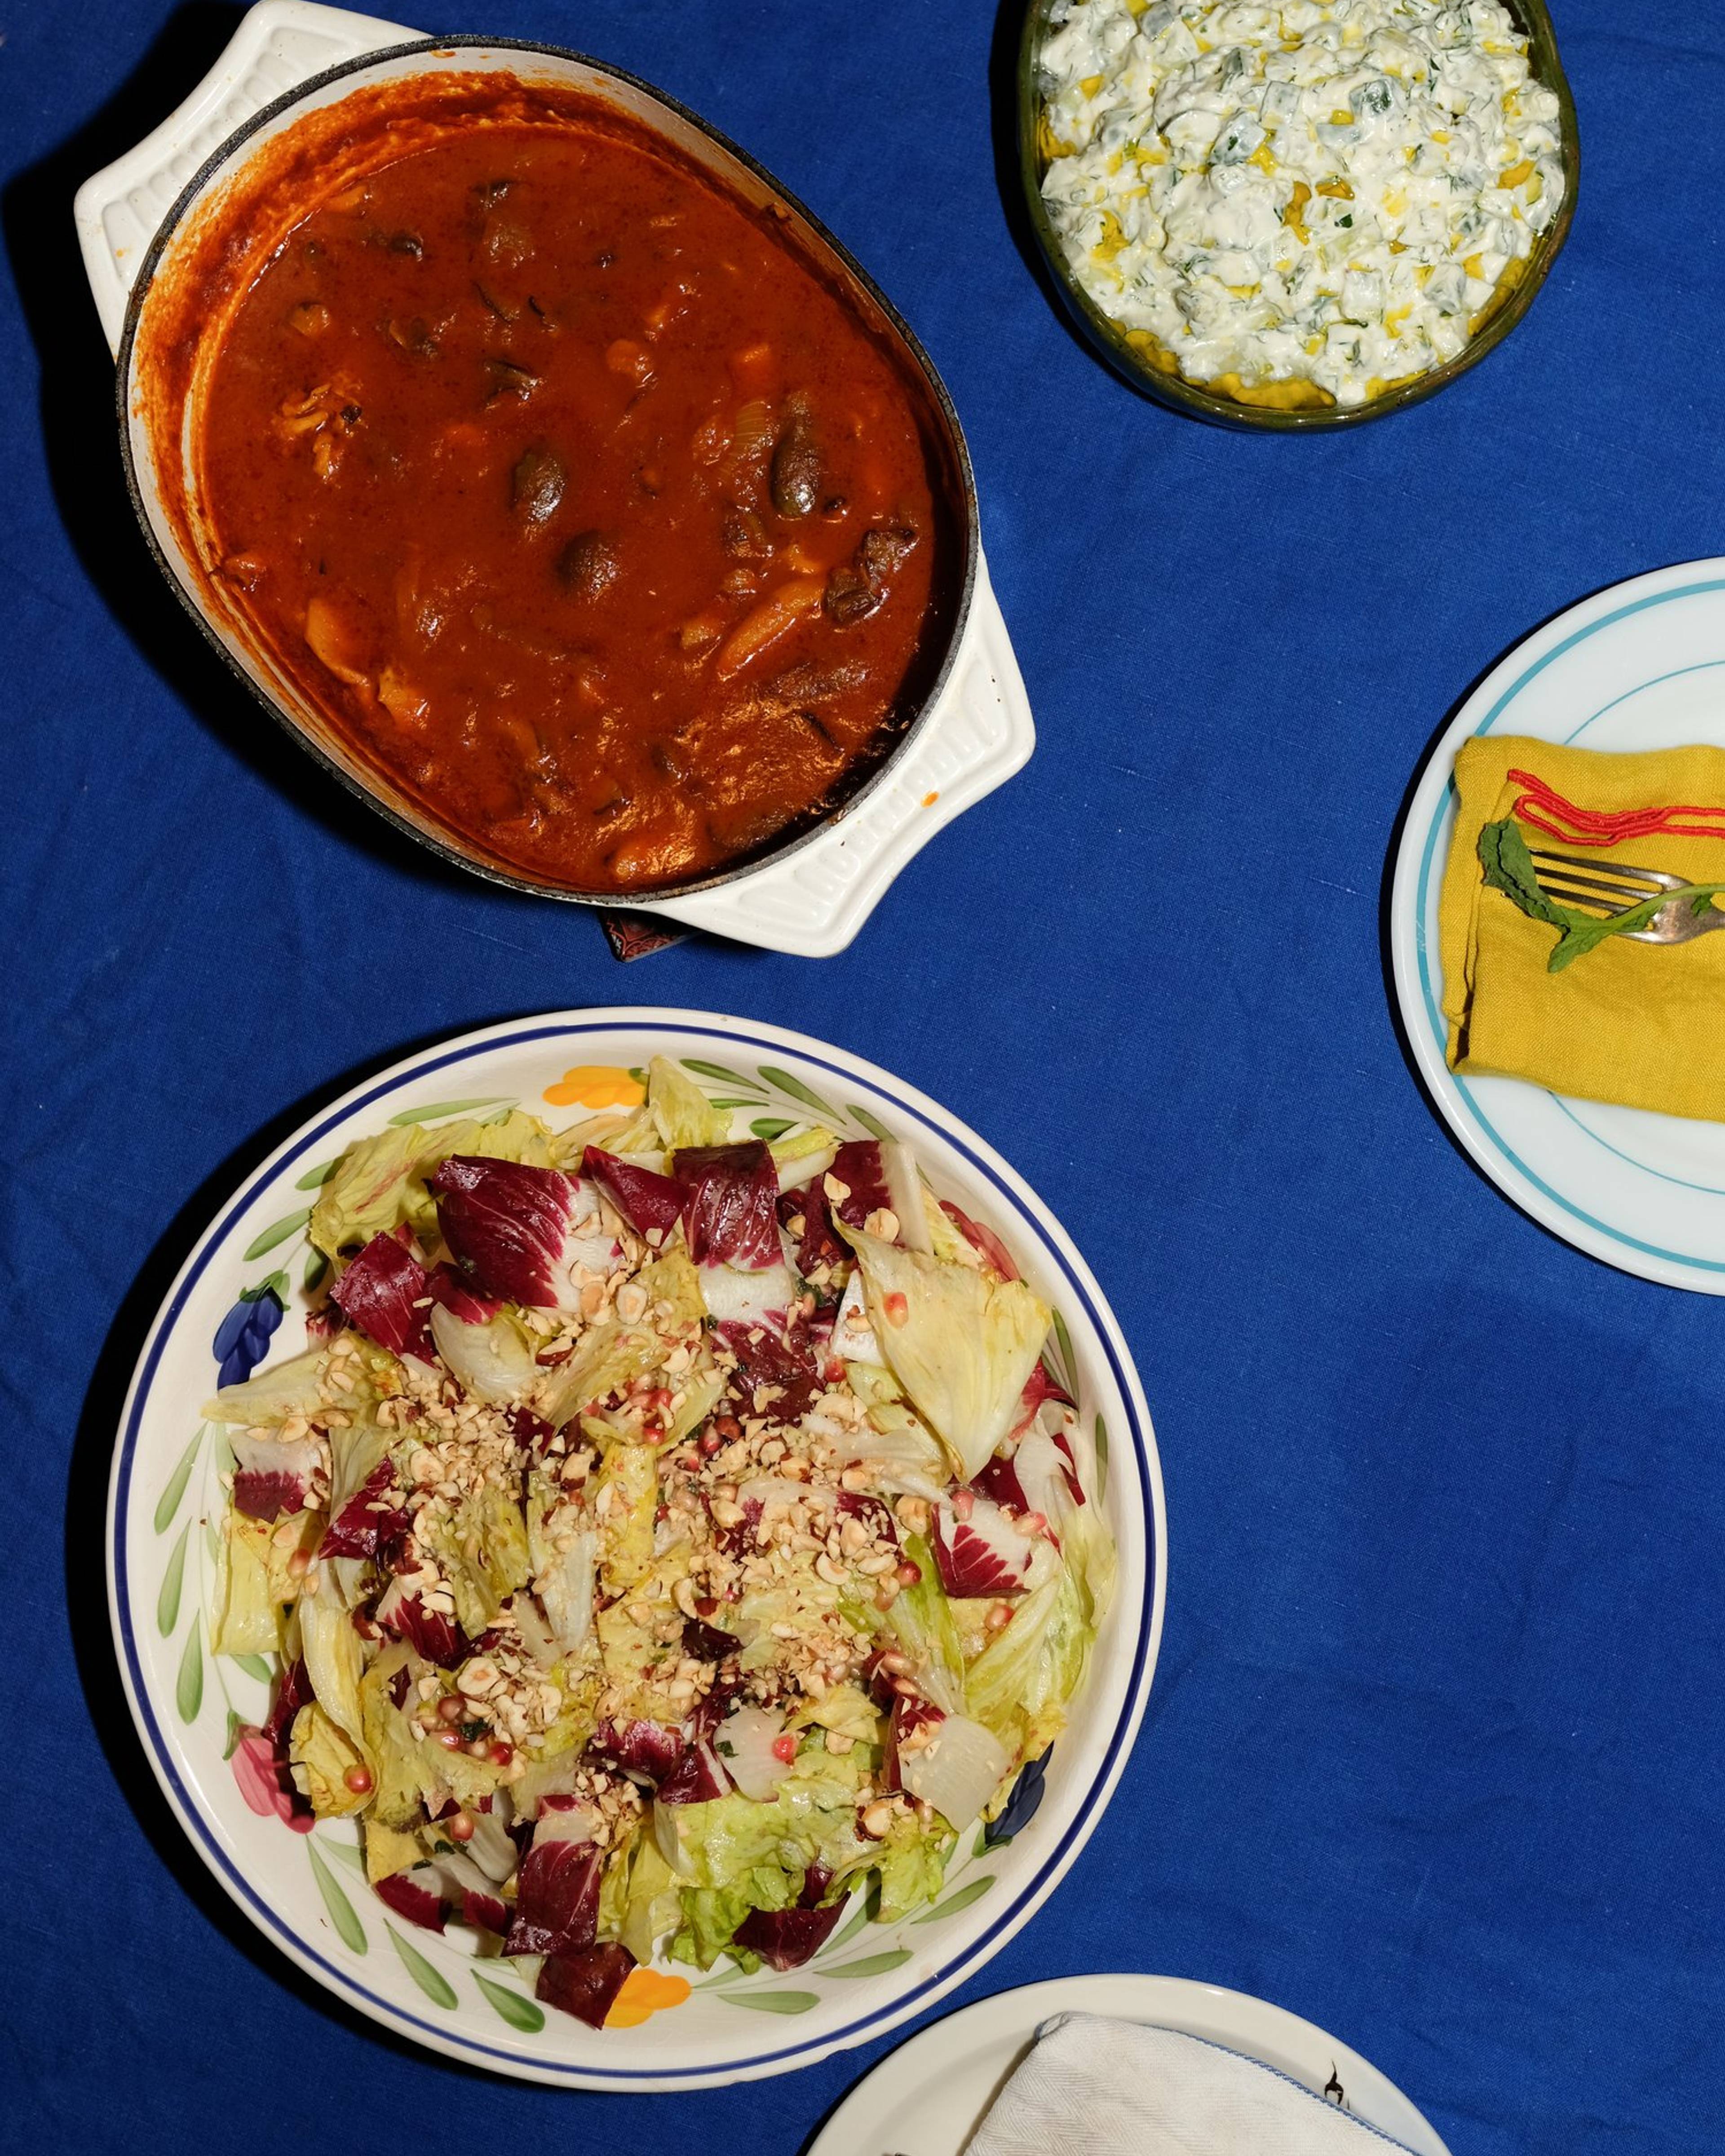 radicchio salad served on a plate on blue tablecloth